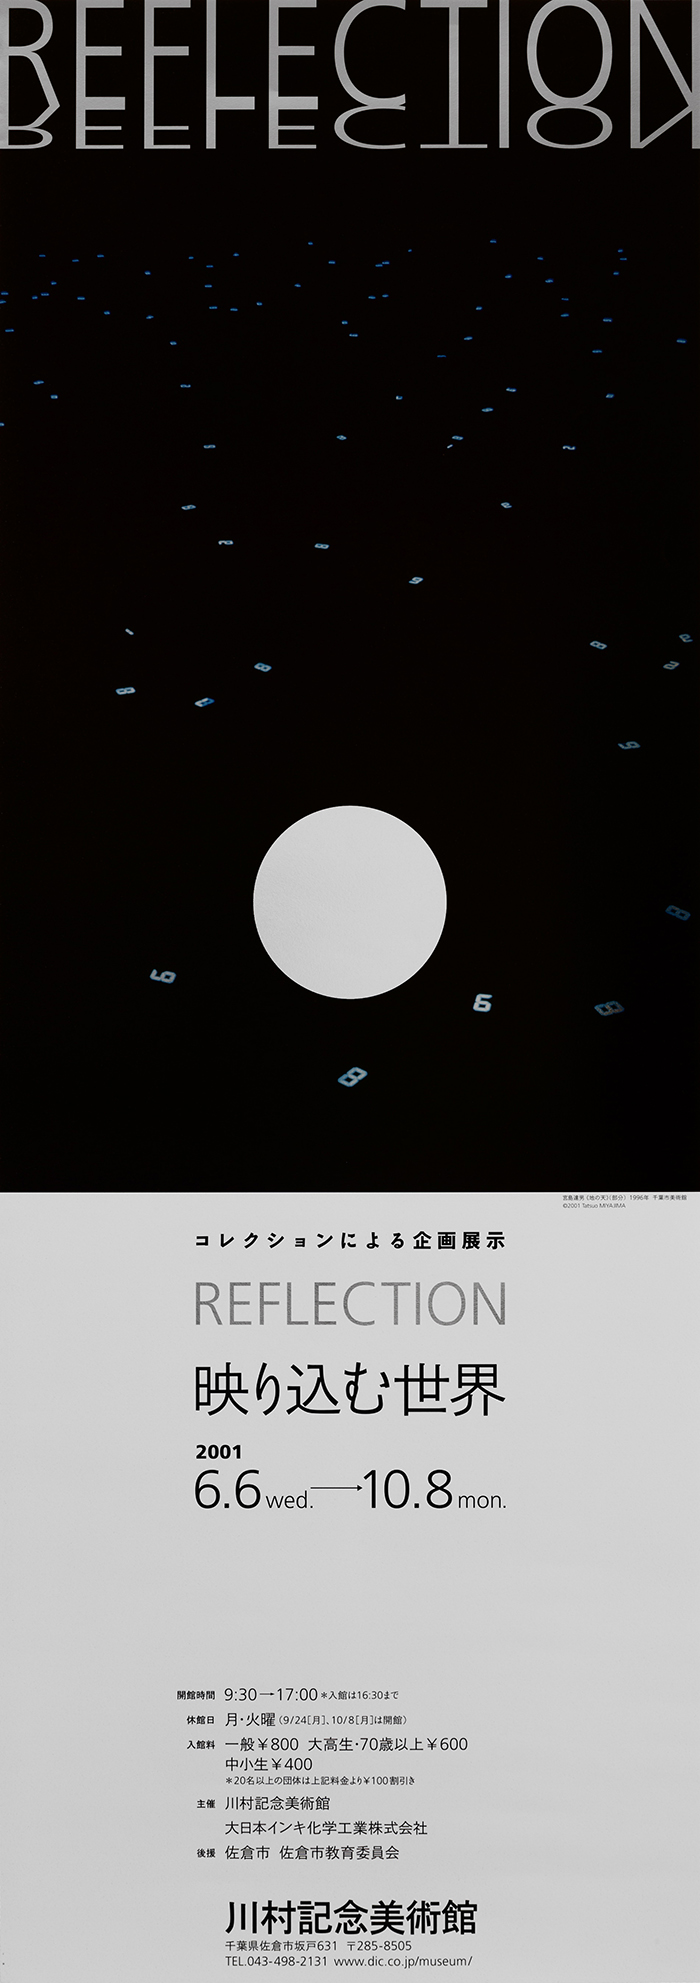 Reflection 映り込む世界 Dic川村記念美術館